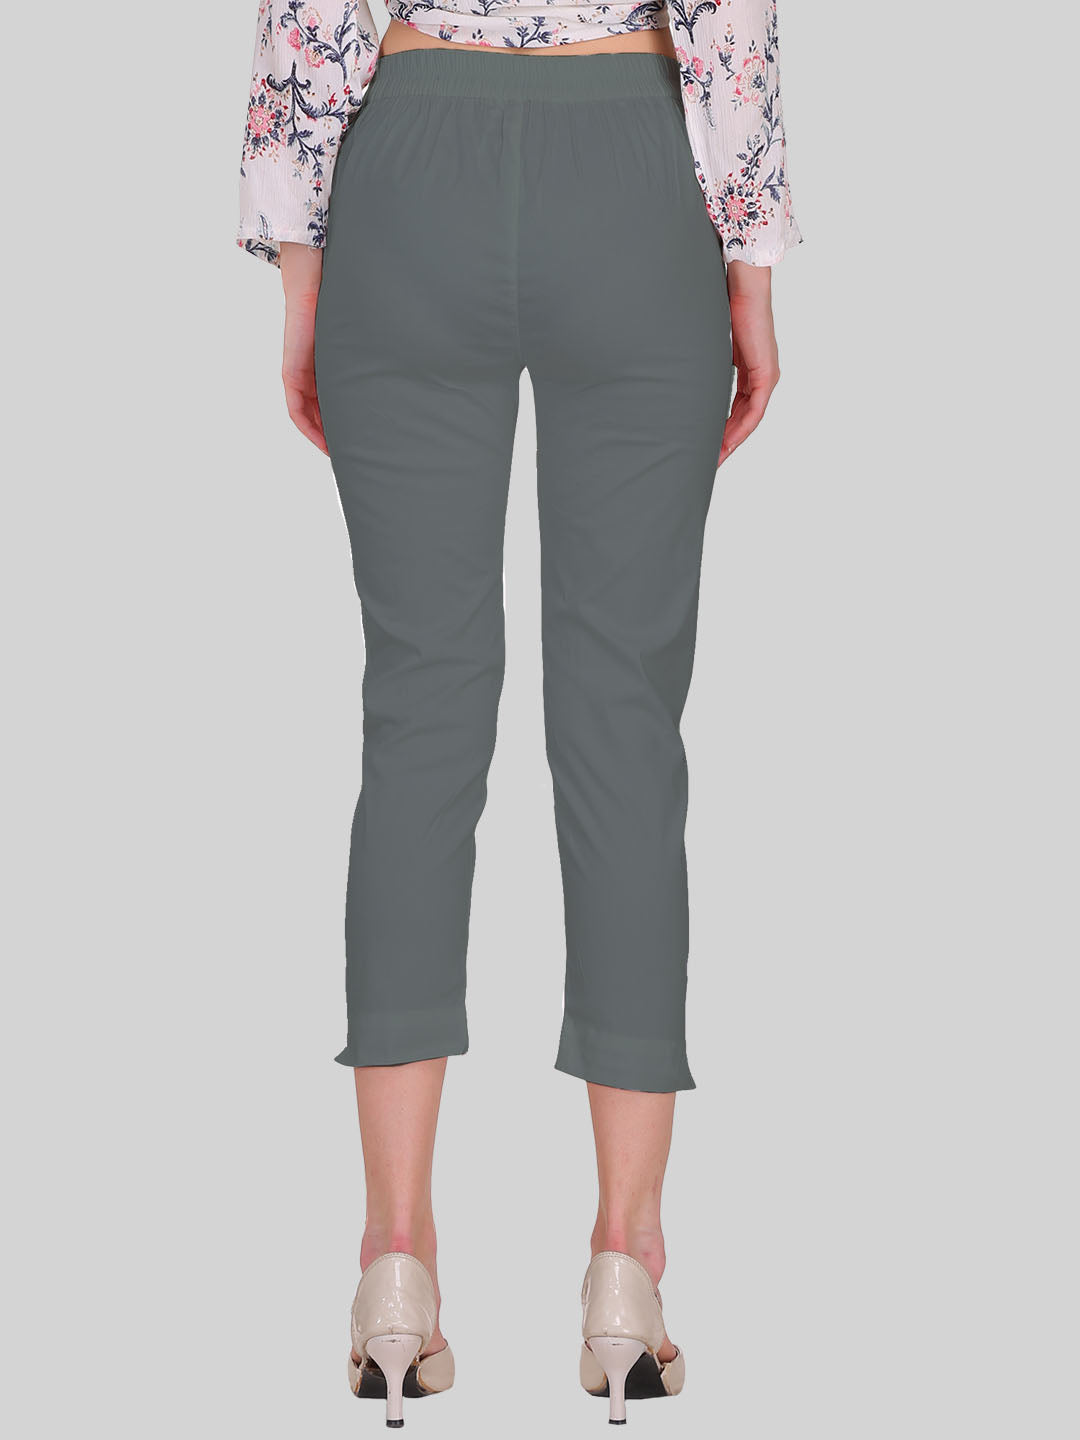 Saundarya Women's Graphite Grey Cropped Pants